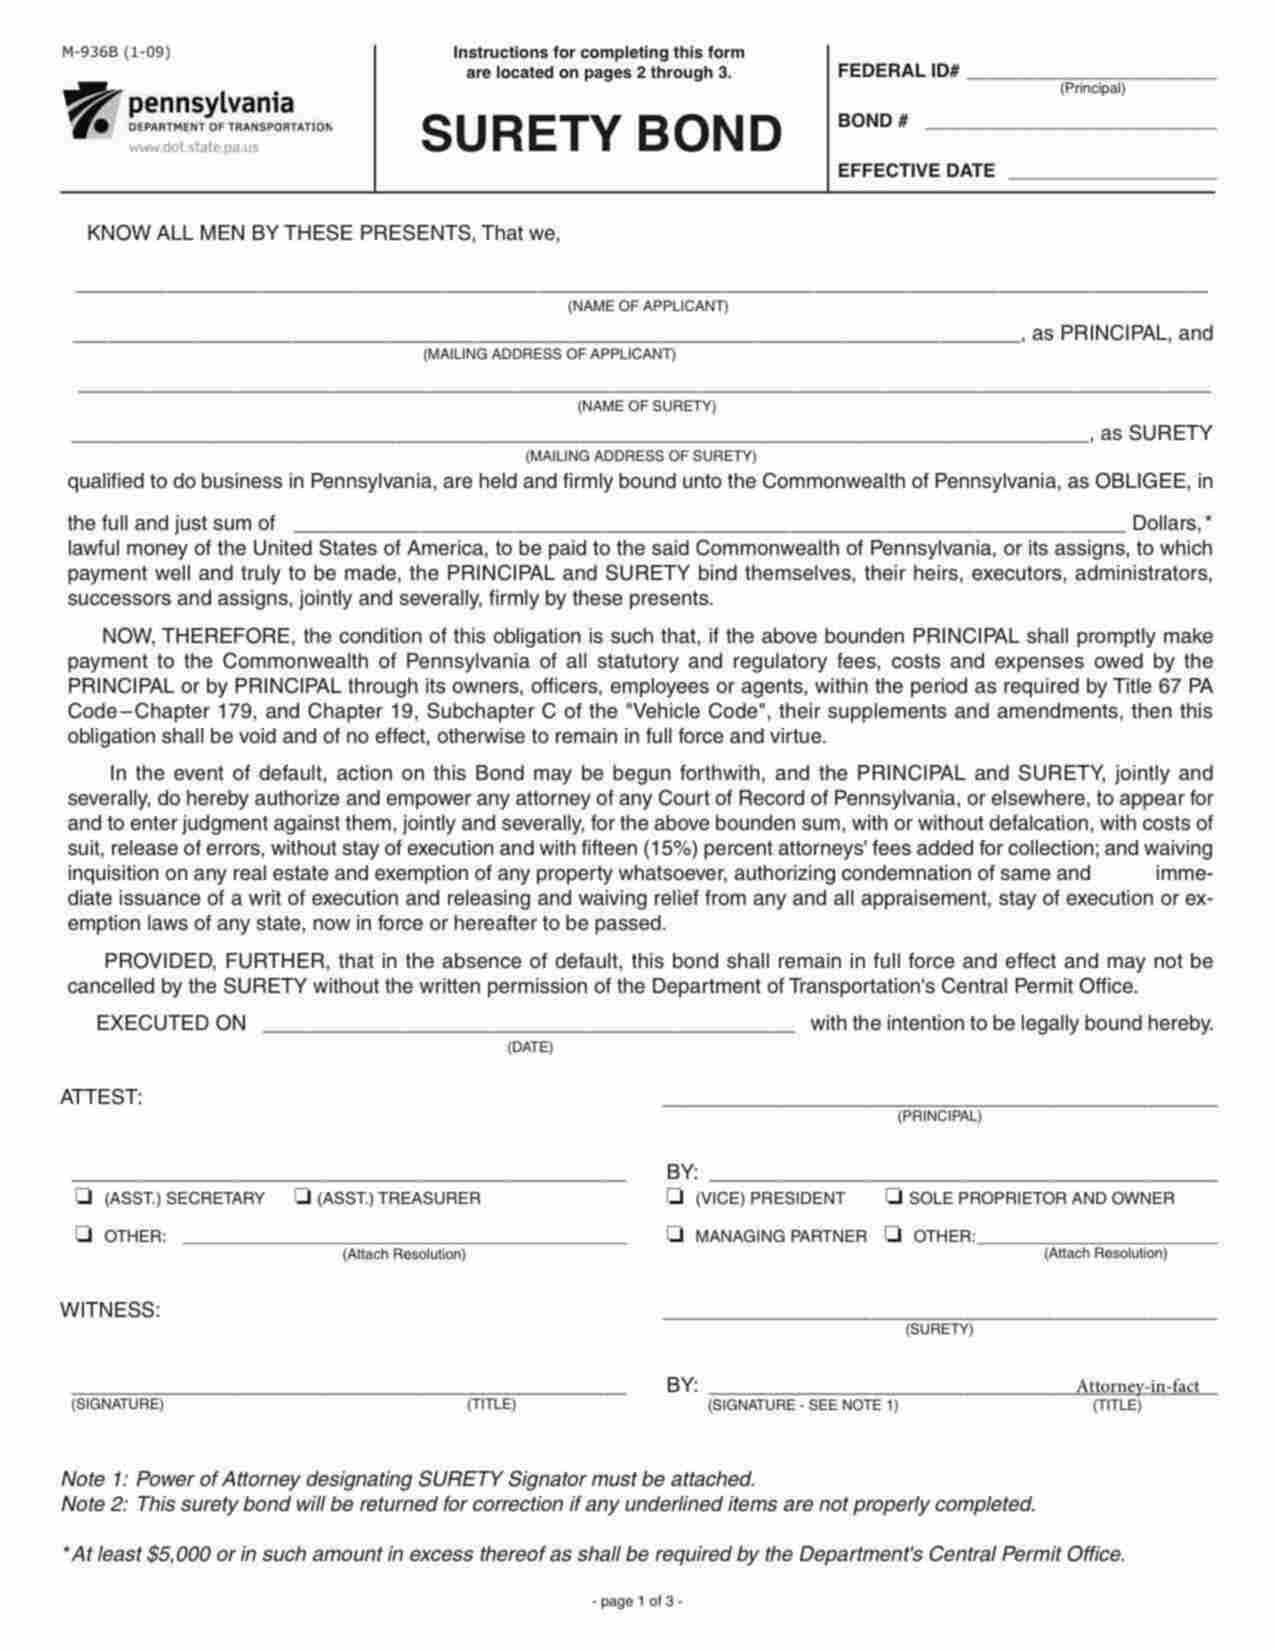 Pennsylvania Special Hauling Permit (M-936B) Bond Form